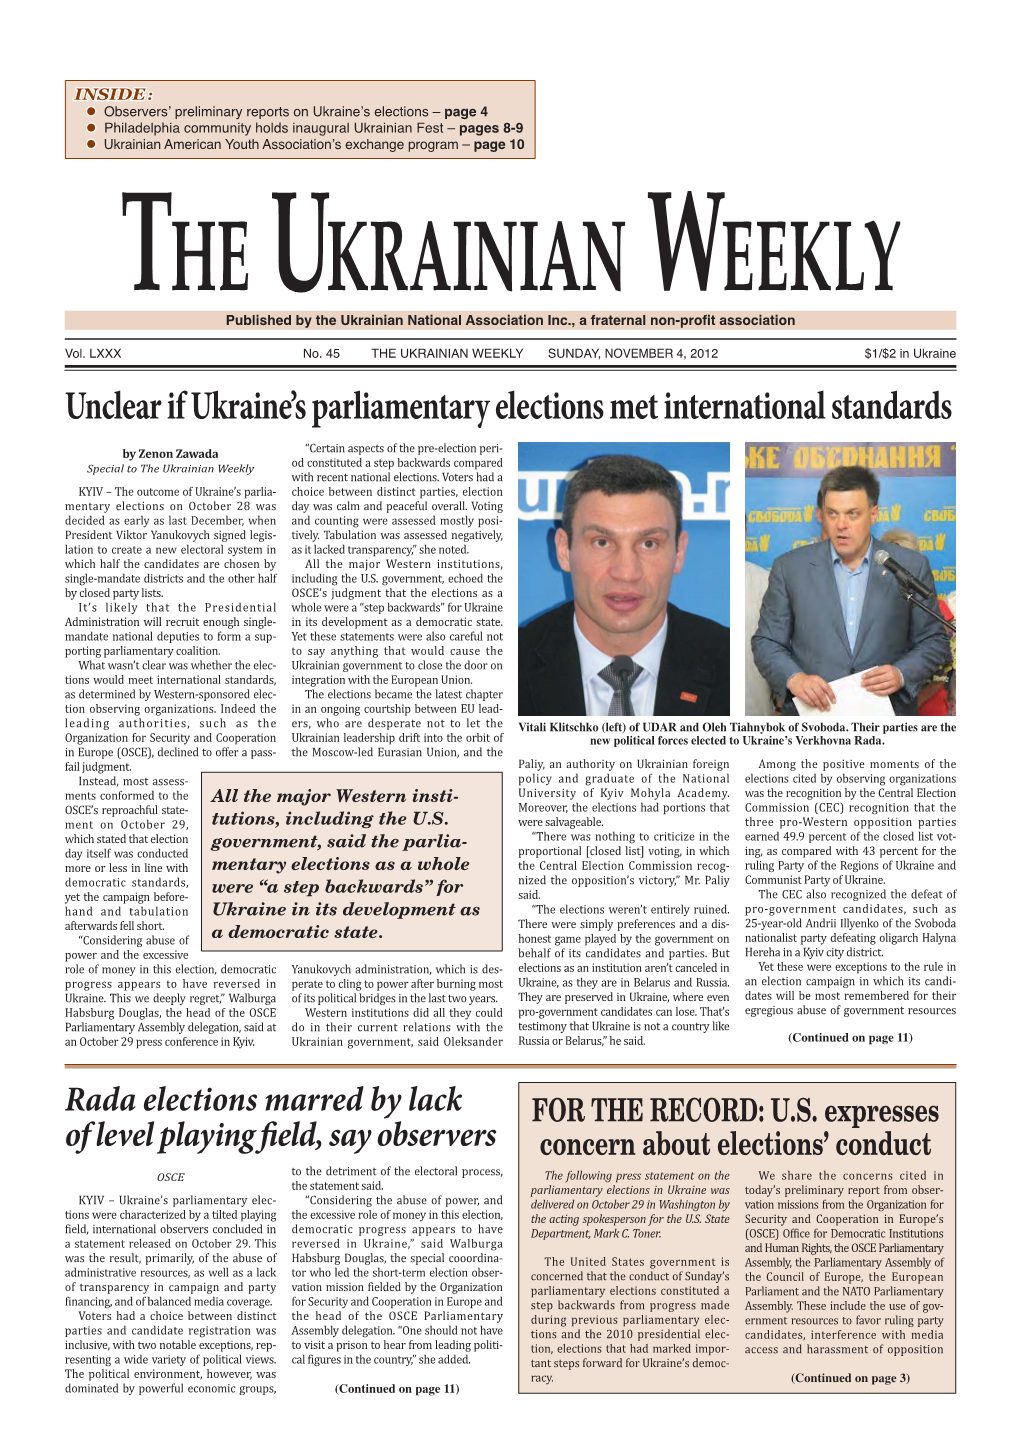 Unclear If Ukraine's Parliamentary Elections Met International Standards